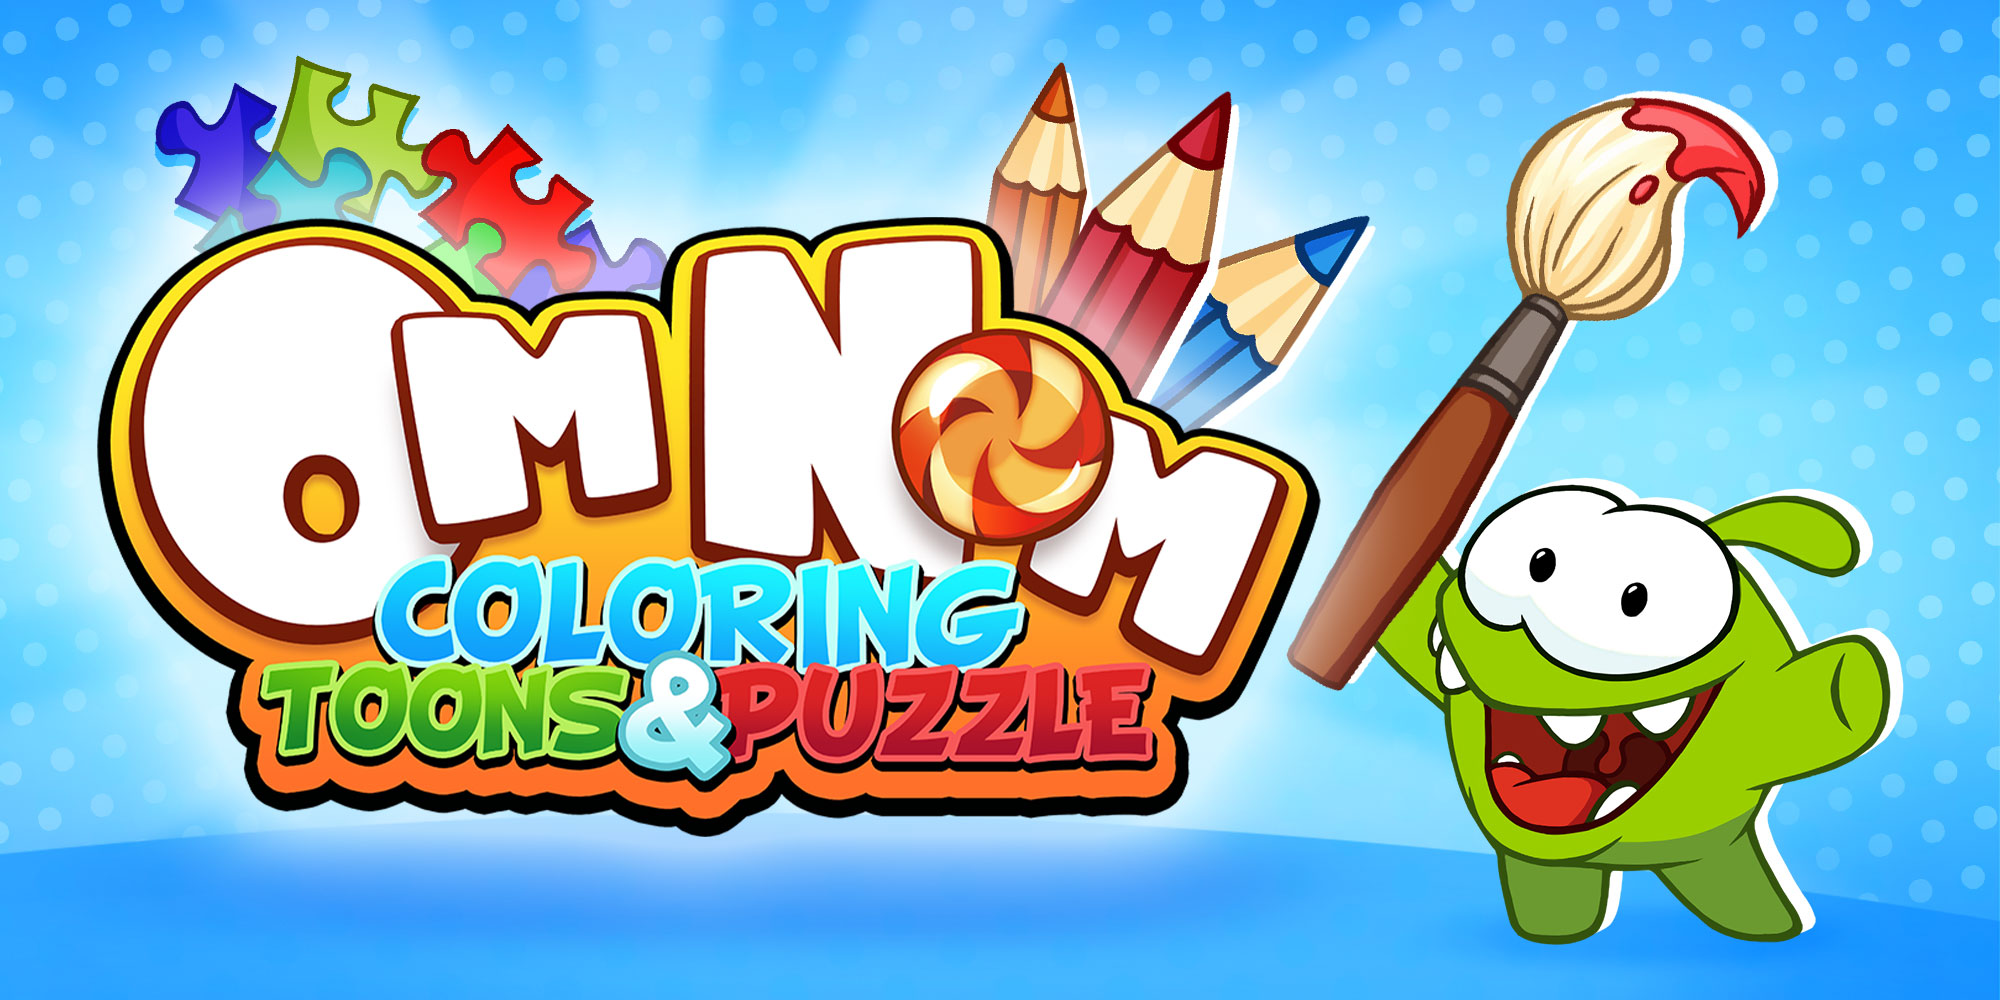 Om Nom: Coloring, Toons Puzzle | descargables Switch | Juegos |